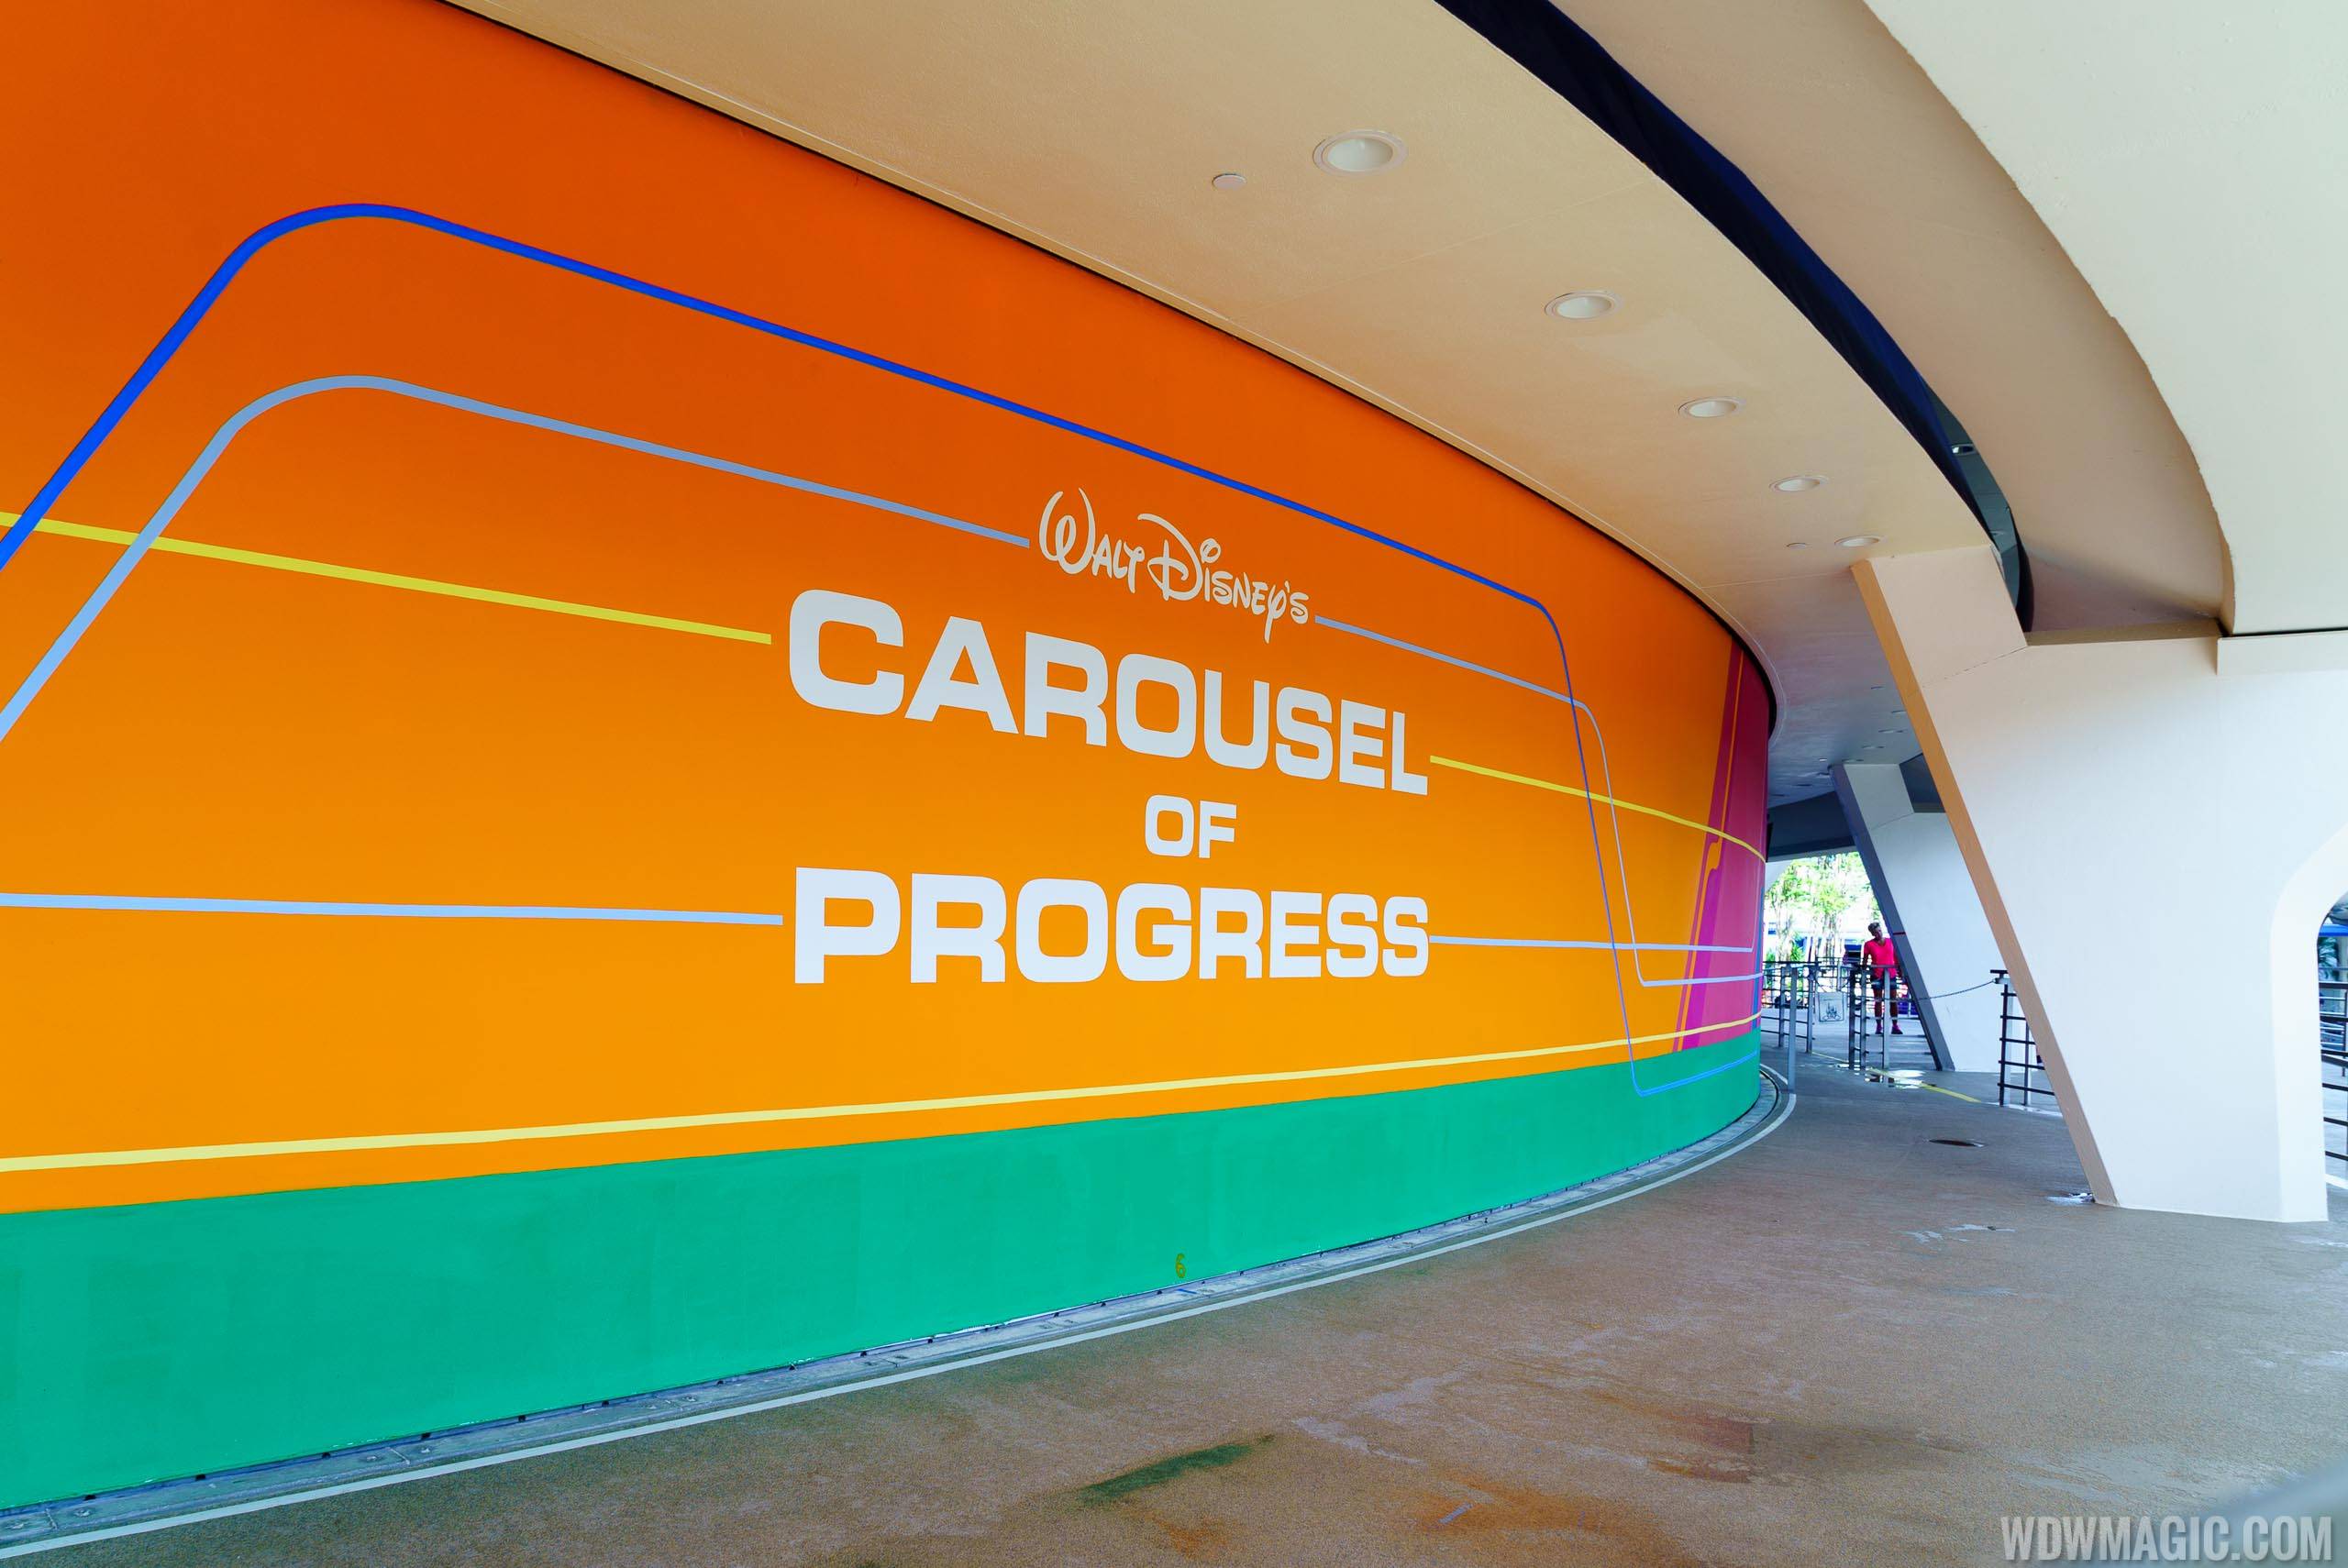 New exterior paint scheme at Carousel of Progress